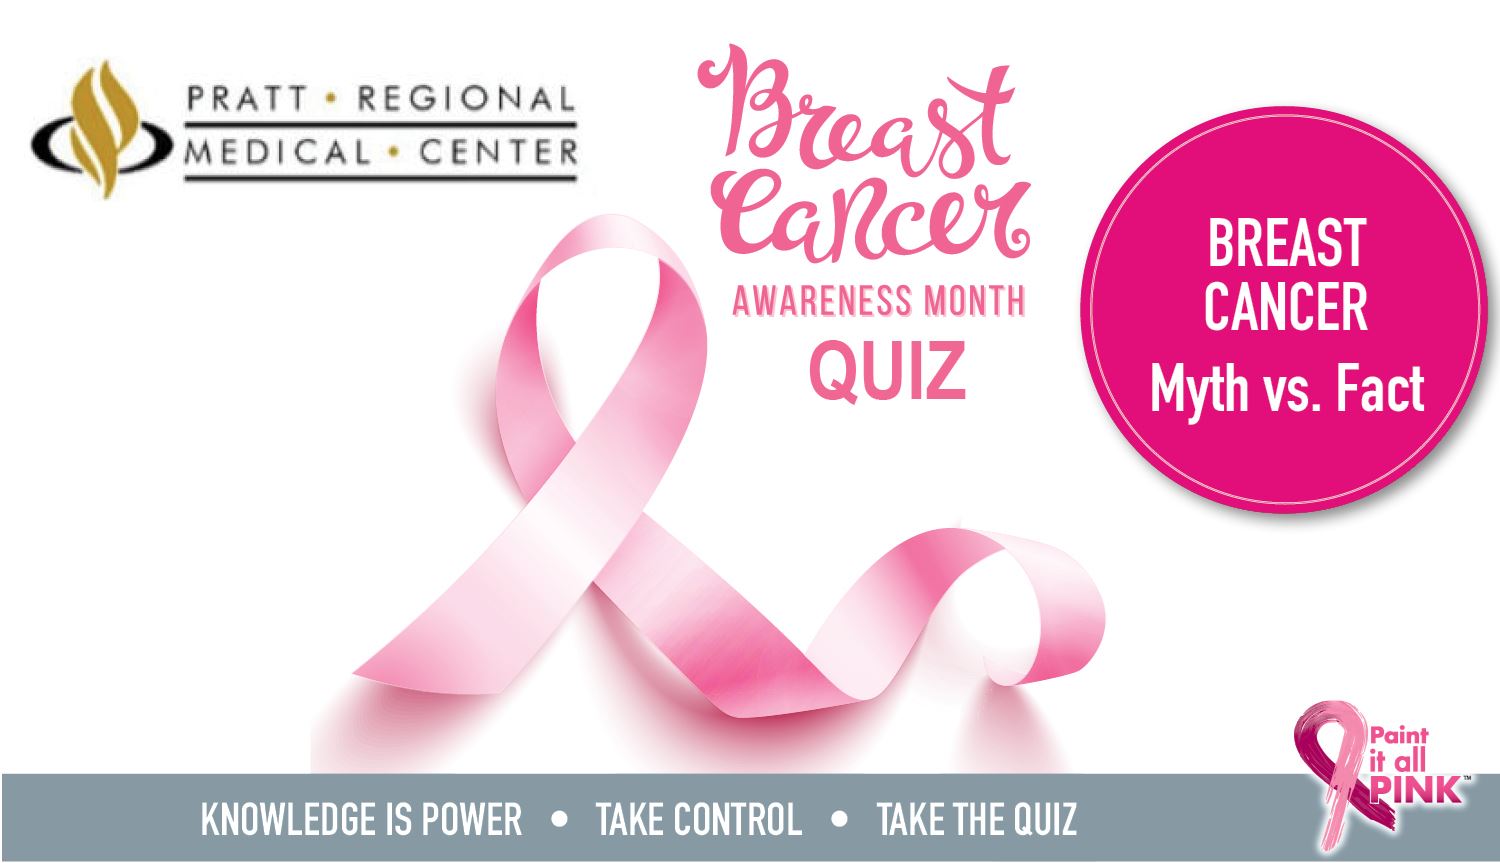 Breast Cancer: Myth or Fact? 